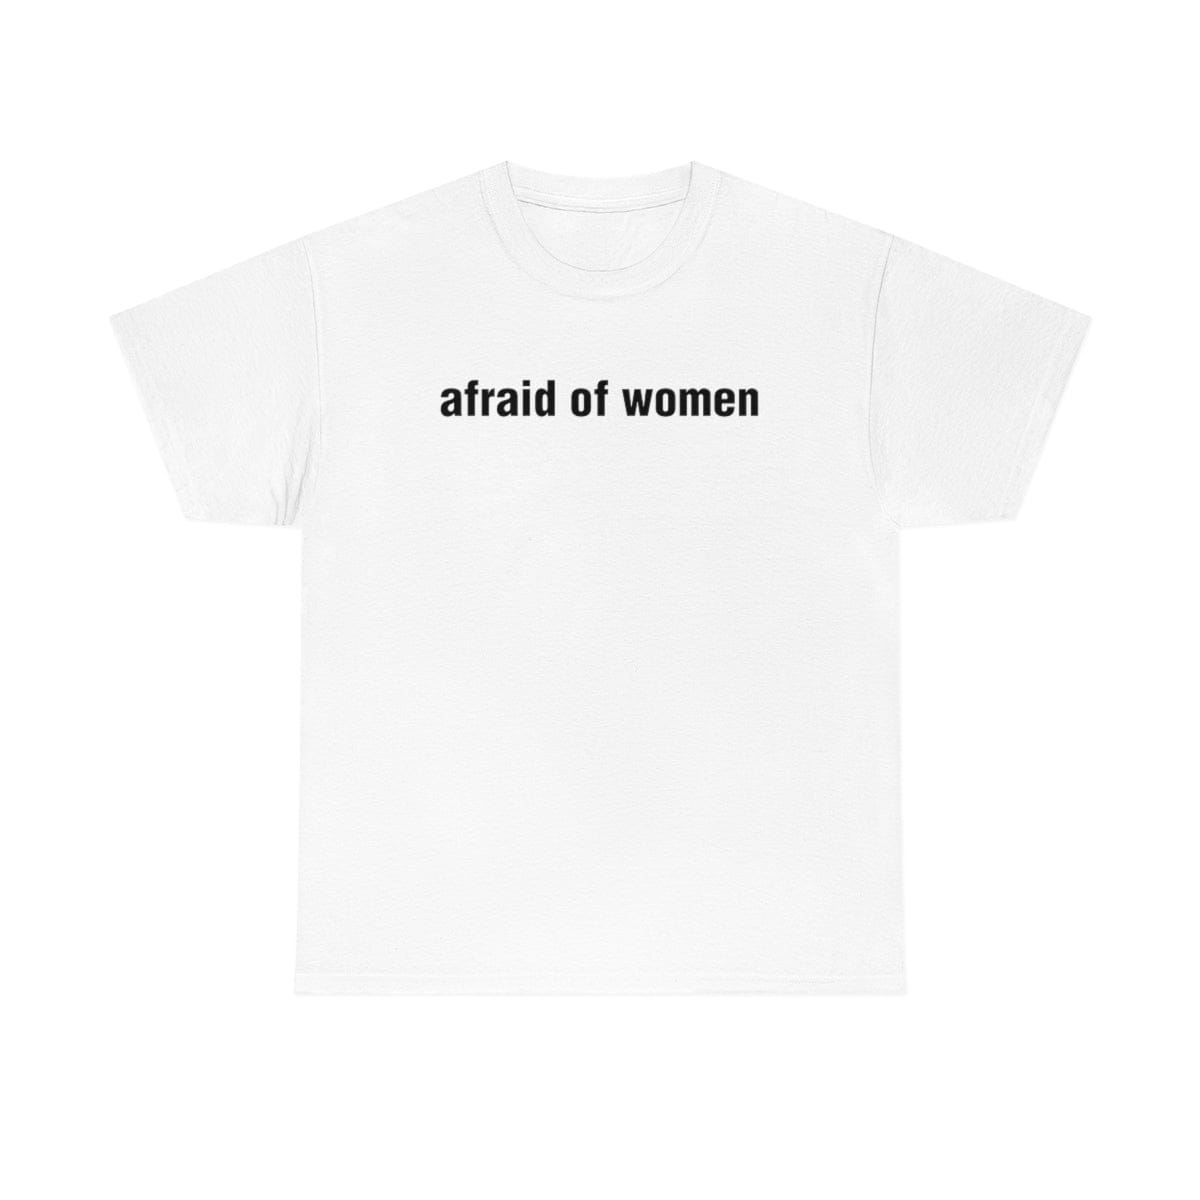 afraid of women